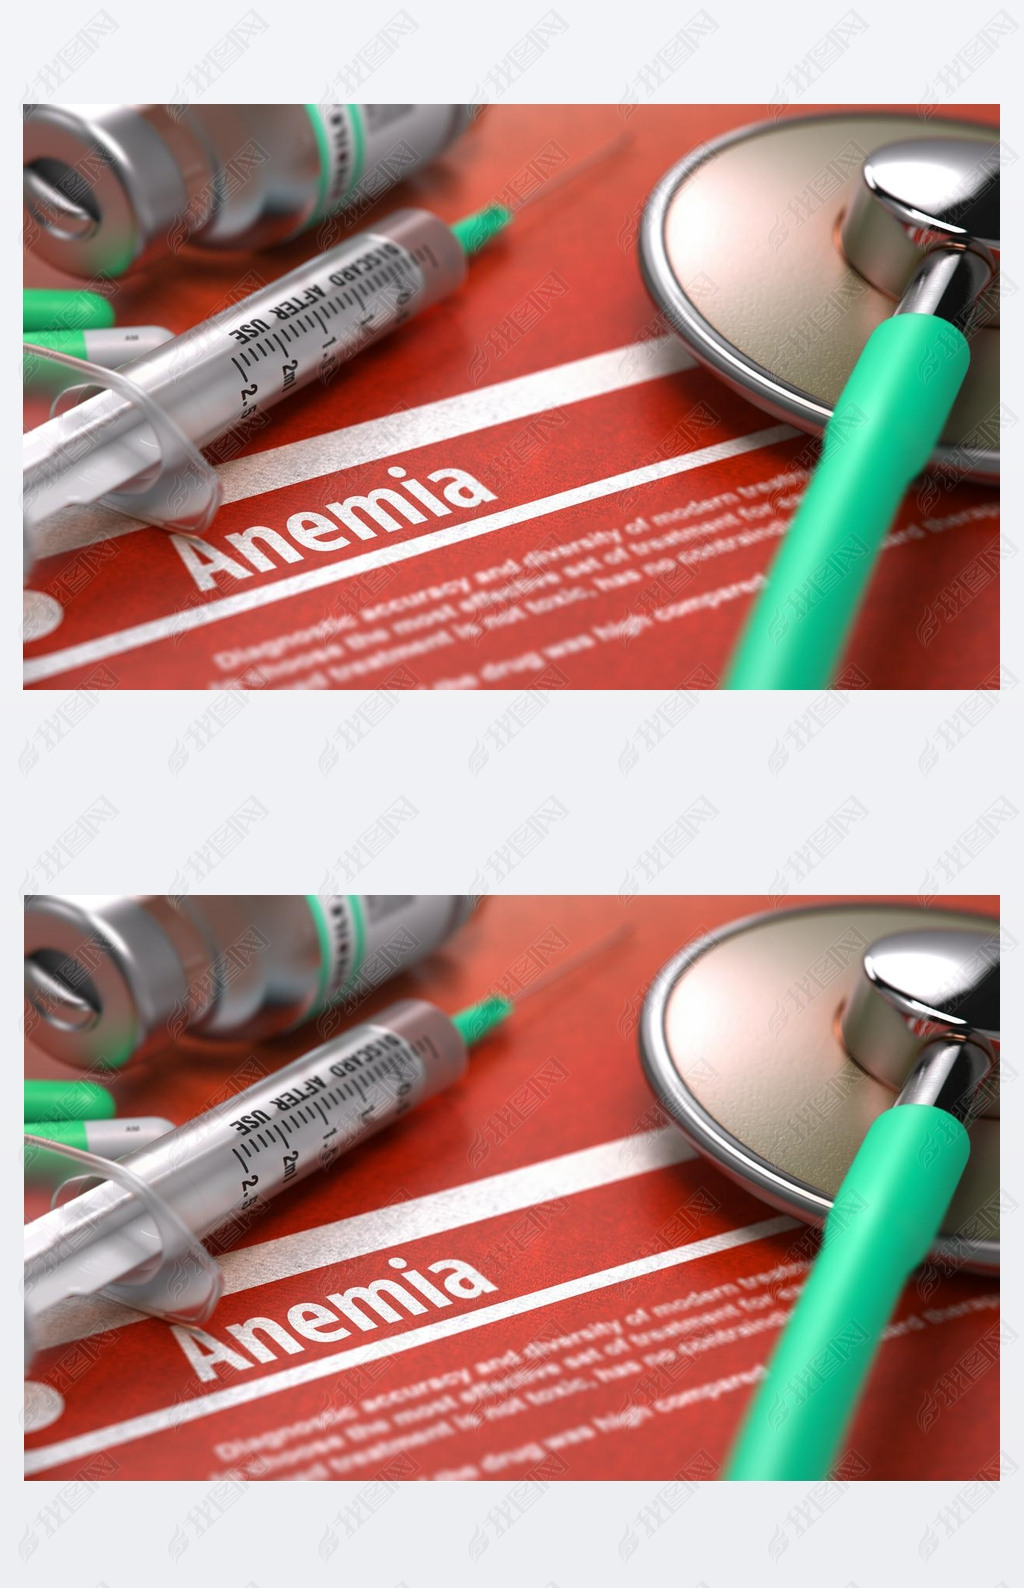 Anemia - Printed Diagnosis. Medical Concept.